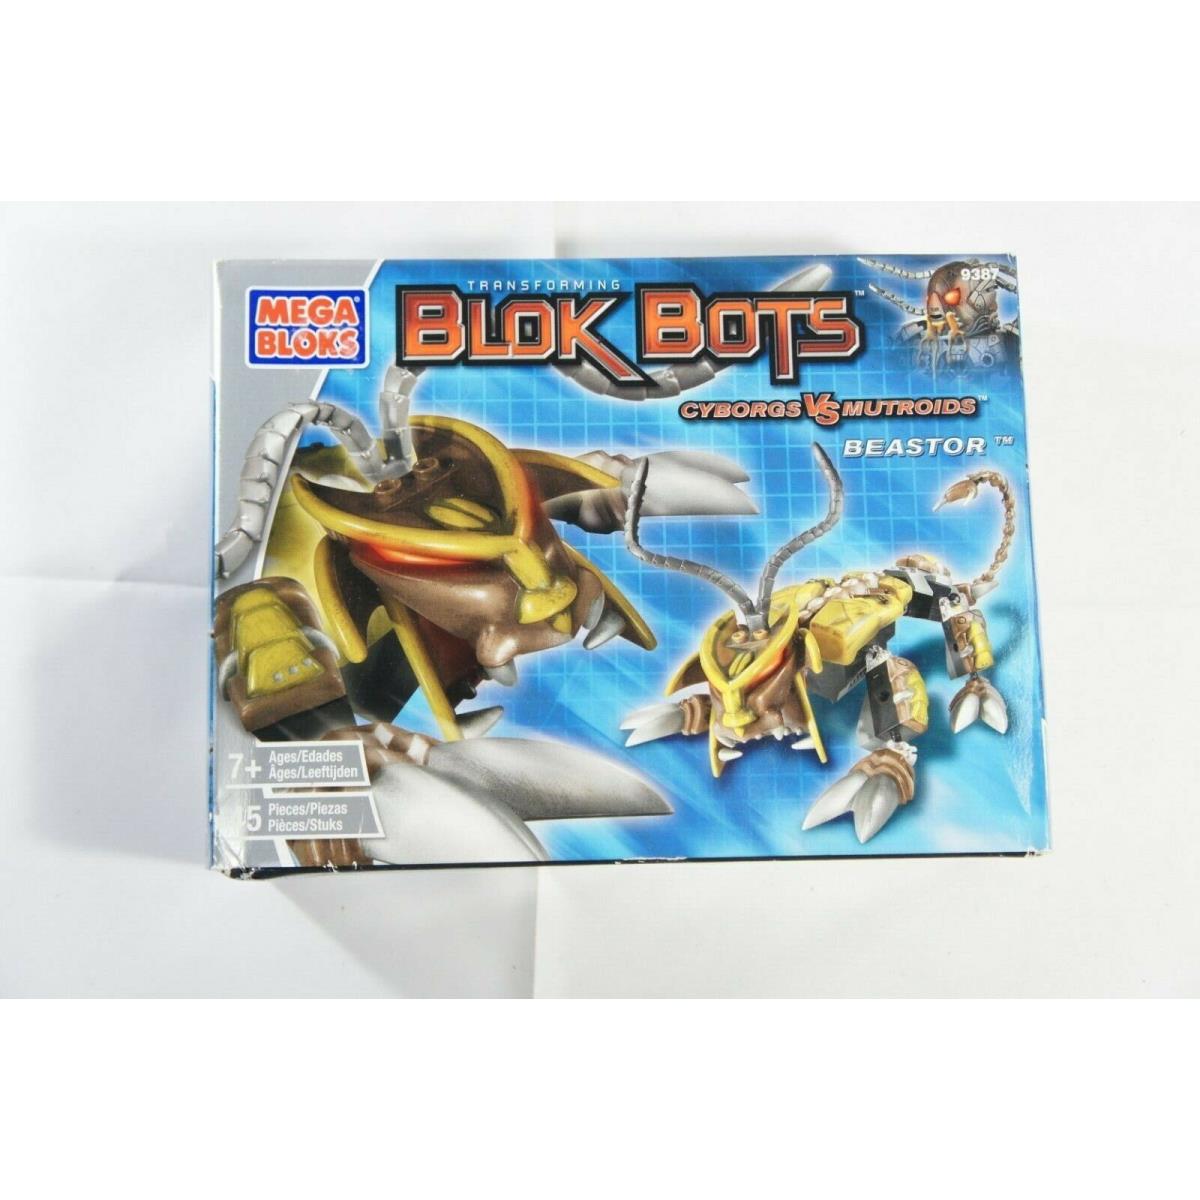 Mega Bloks Transforming Blok Bots Cyborgs VS Mutroids Beastor 2003